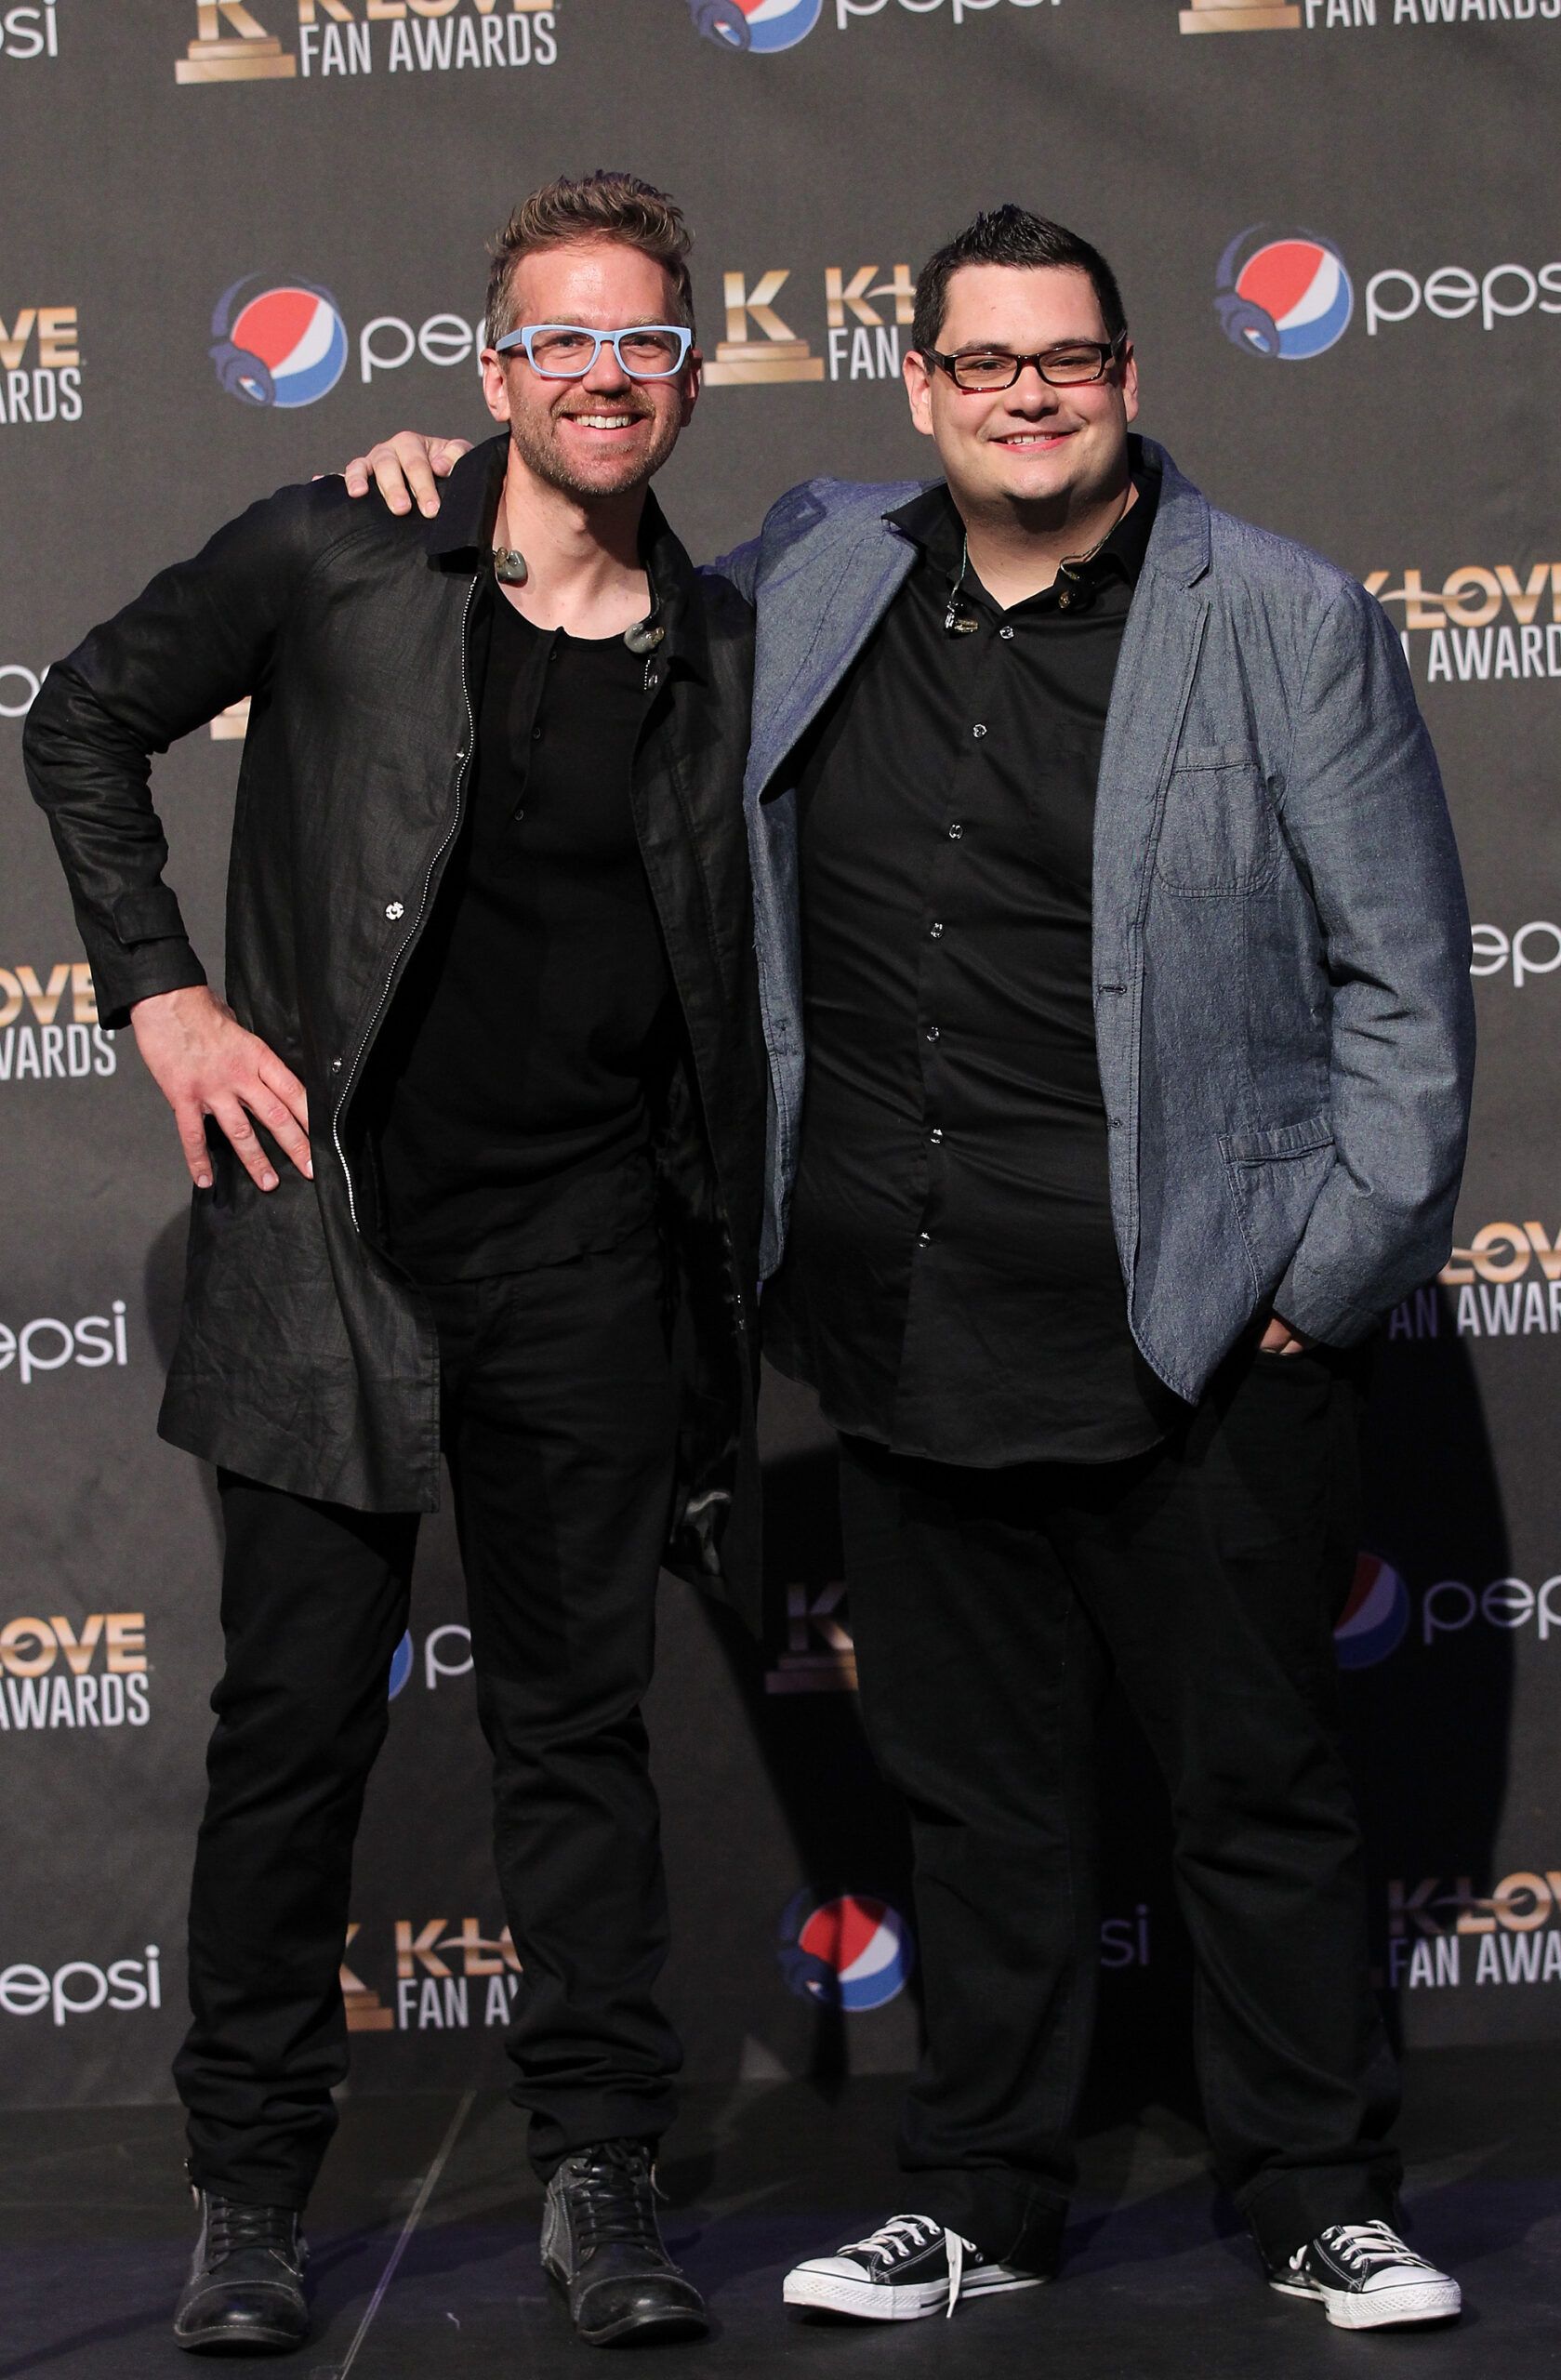 Ben McDonald and David Frey pose together at the KLOVE Fan Awards